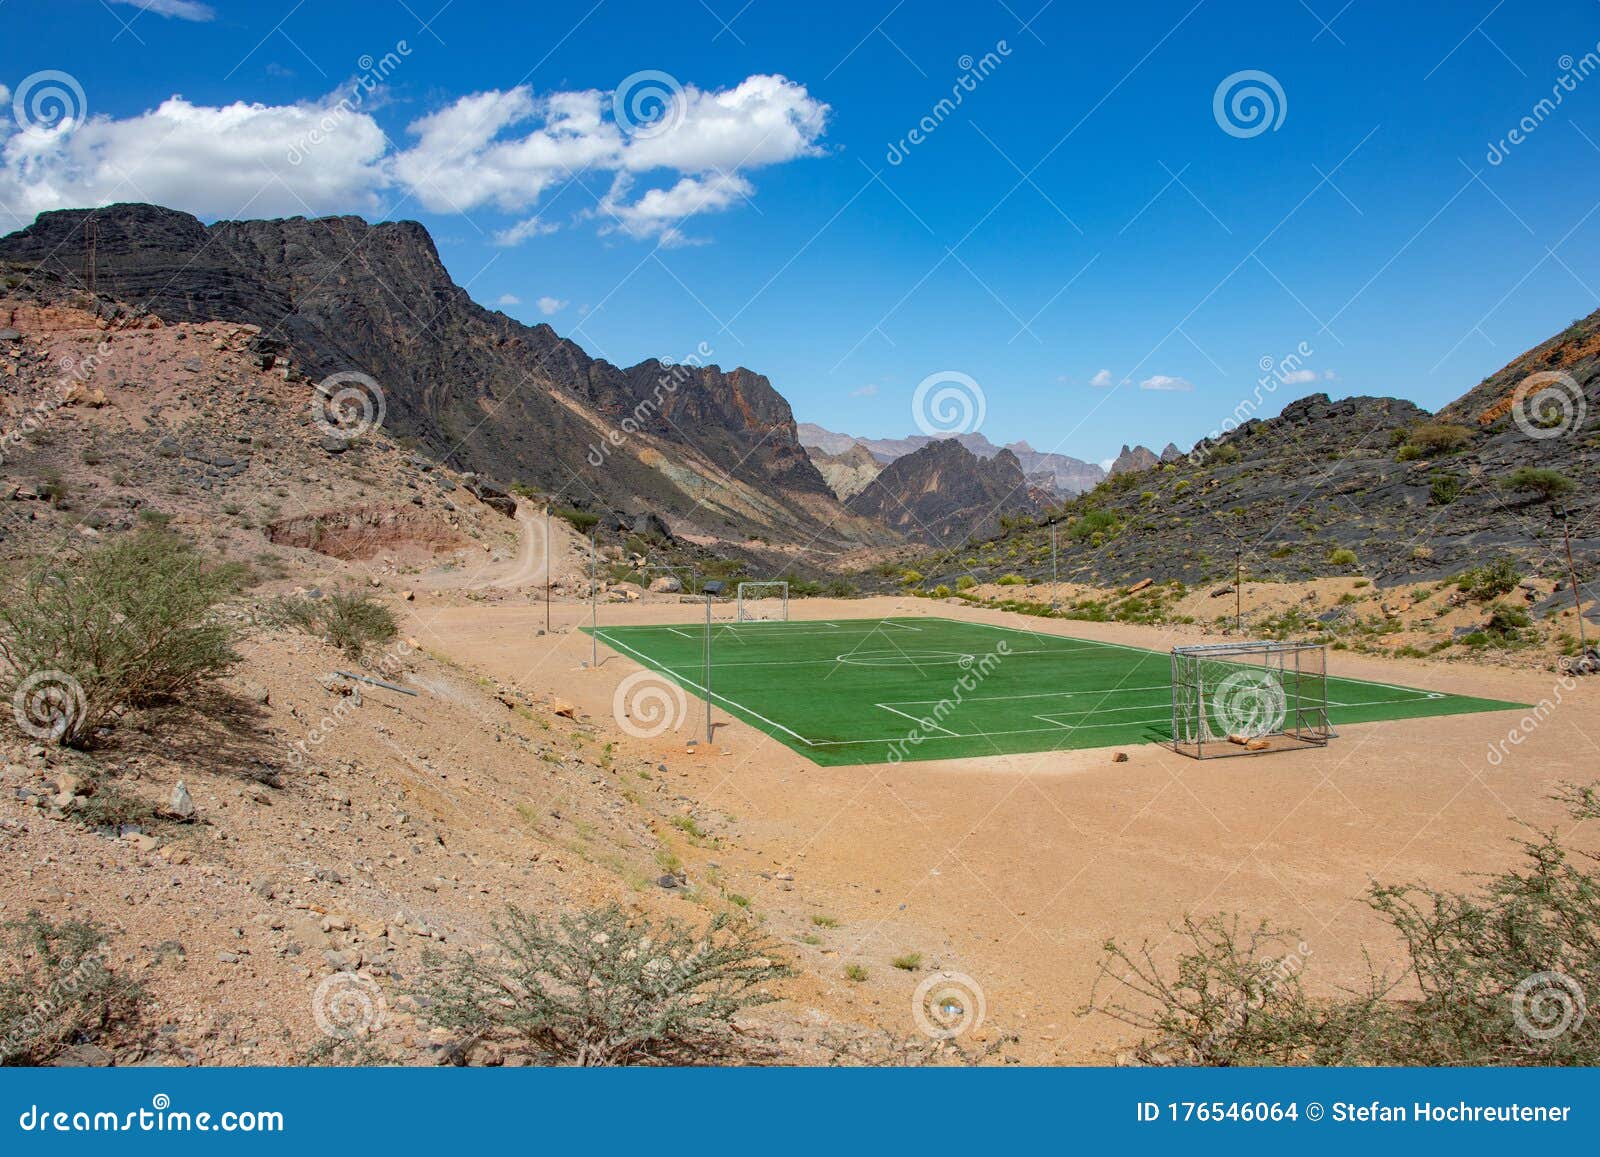 football and soccer field inside mountain and valley along wadi sahtan road in al hajir mountains between nizwa and mascat in oman